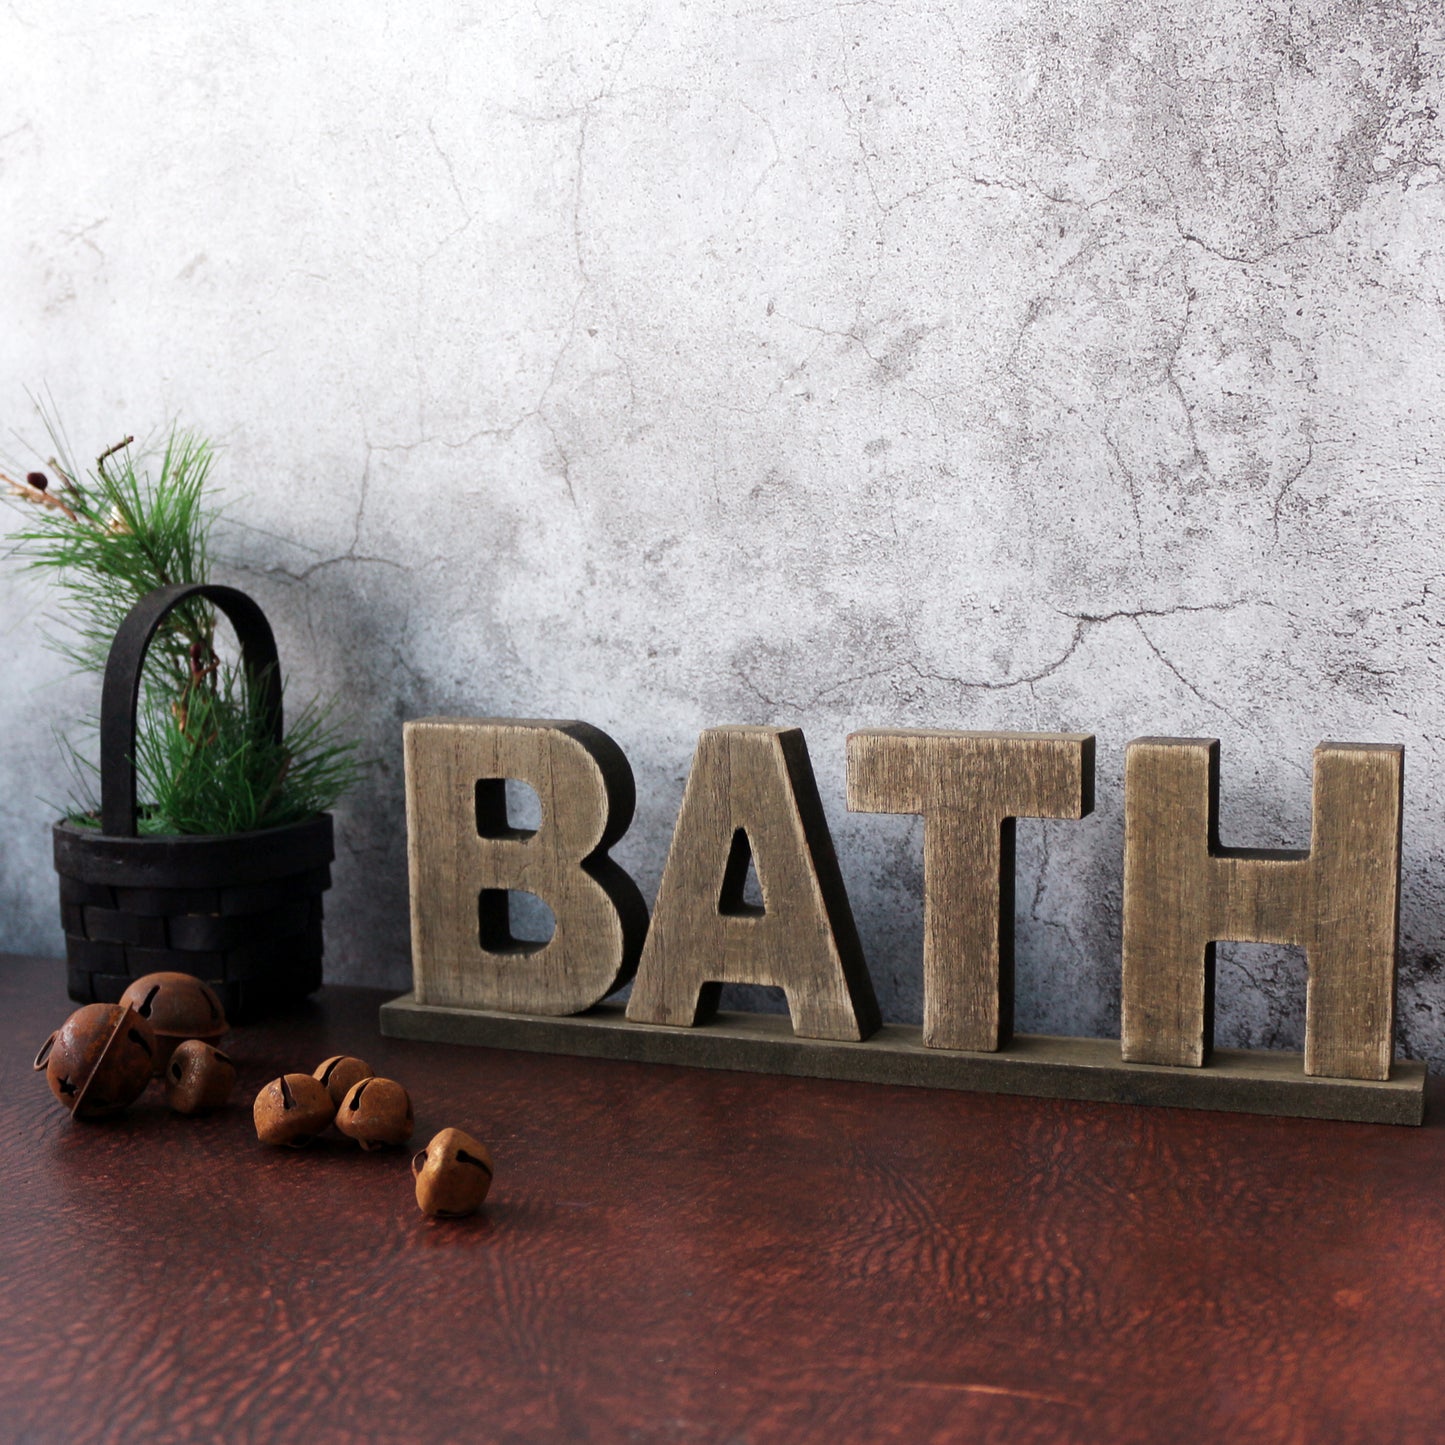 CVHOMEDECO. Rustic Vintage Wooden Words Sign Free Standing Bath, Bathroom/Home Wall/Door Decoration Art (Natural 1)